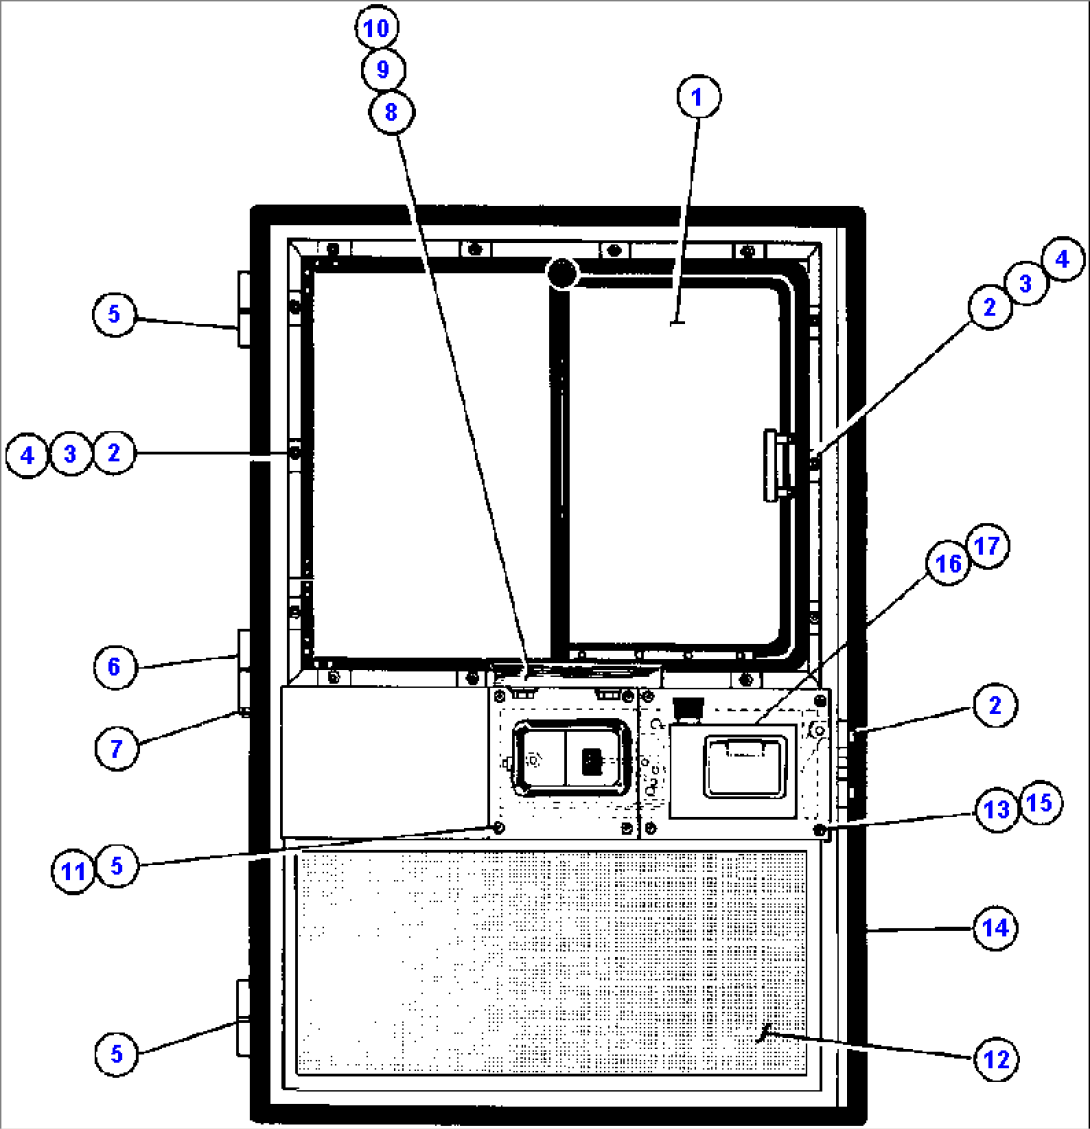 DOOR ASSEMBLY (VE0113-RH/VE7985-LH)